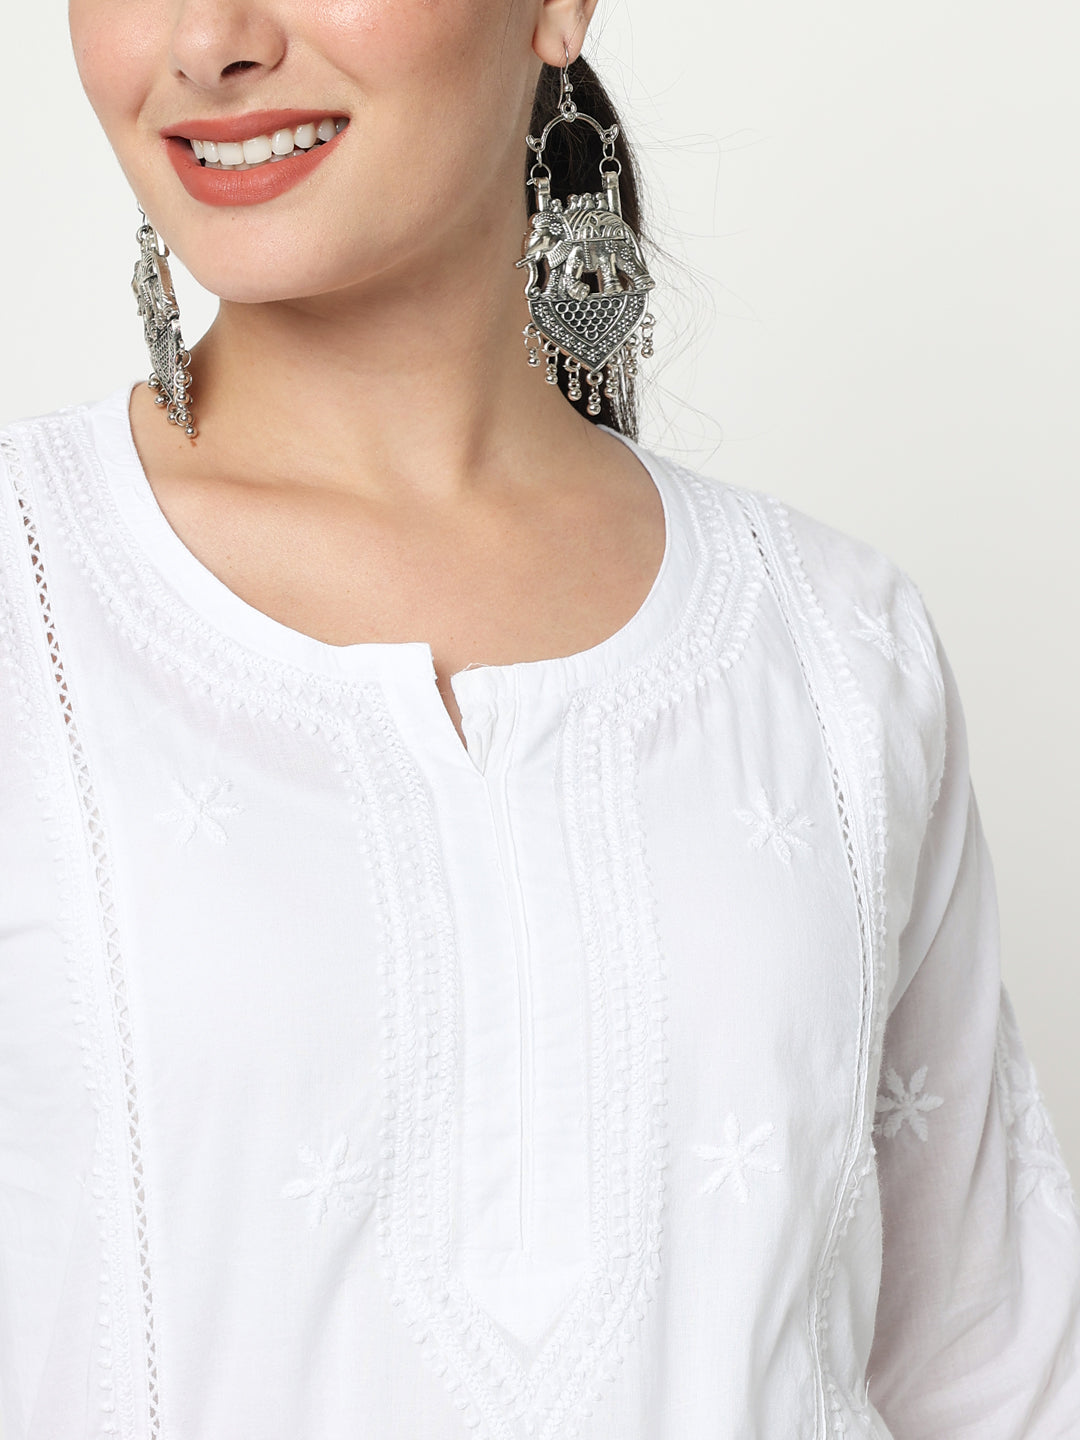 Off-White Color Jaipuri Kurta in Slub Cotton #collar #neck #designs #for # kurti #high #collarneckdesignsforku… | Kurti neck designs, Kurta neck design,  Neck designs